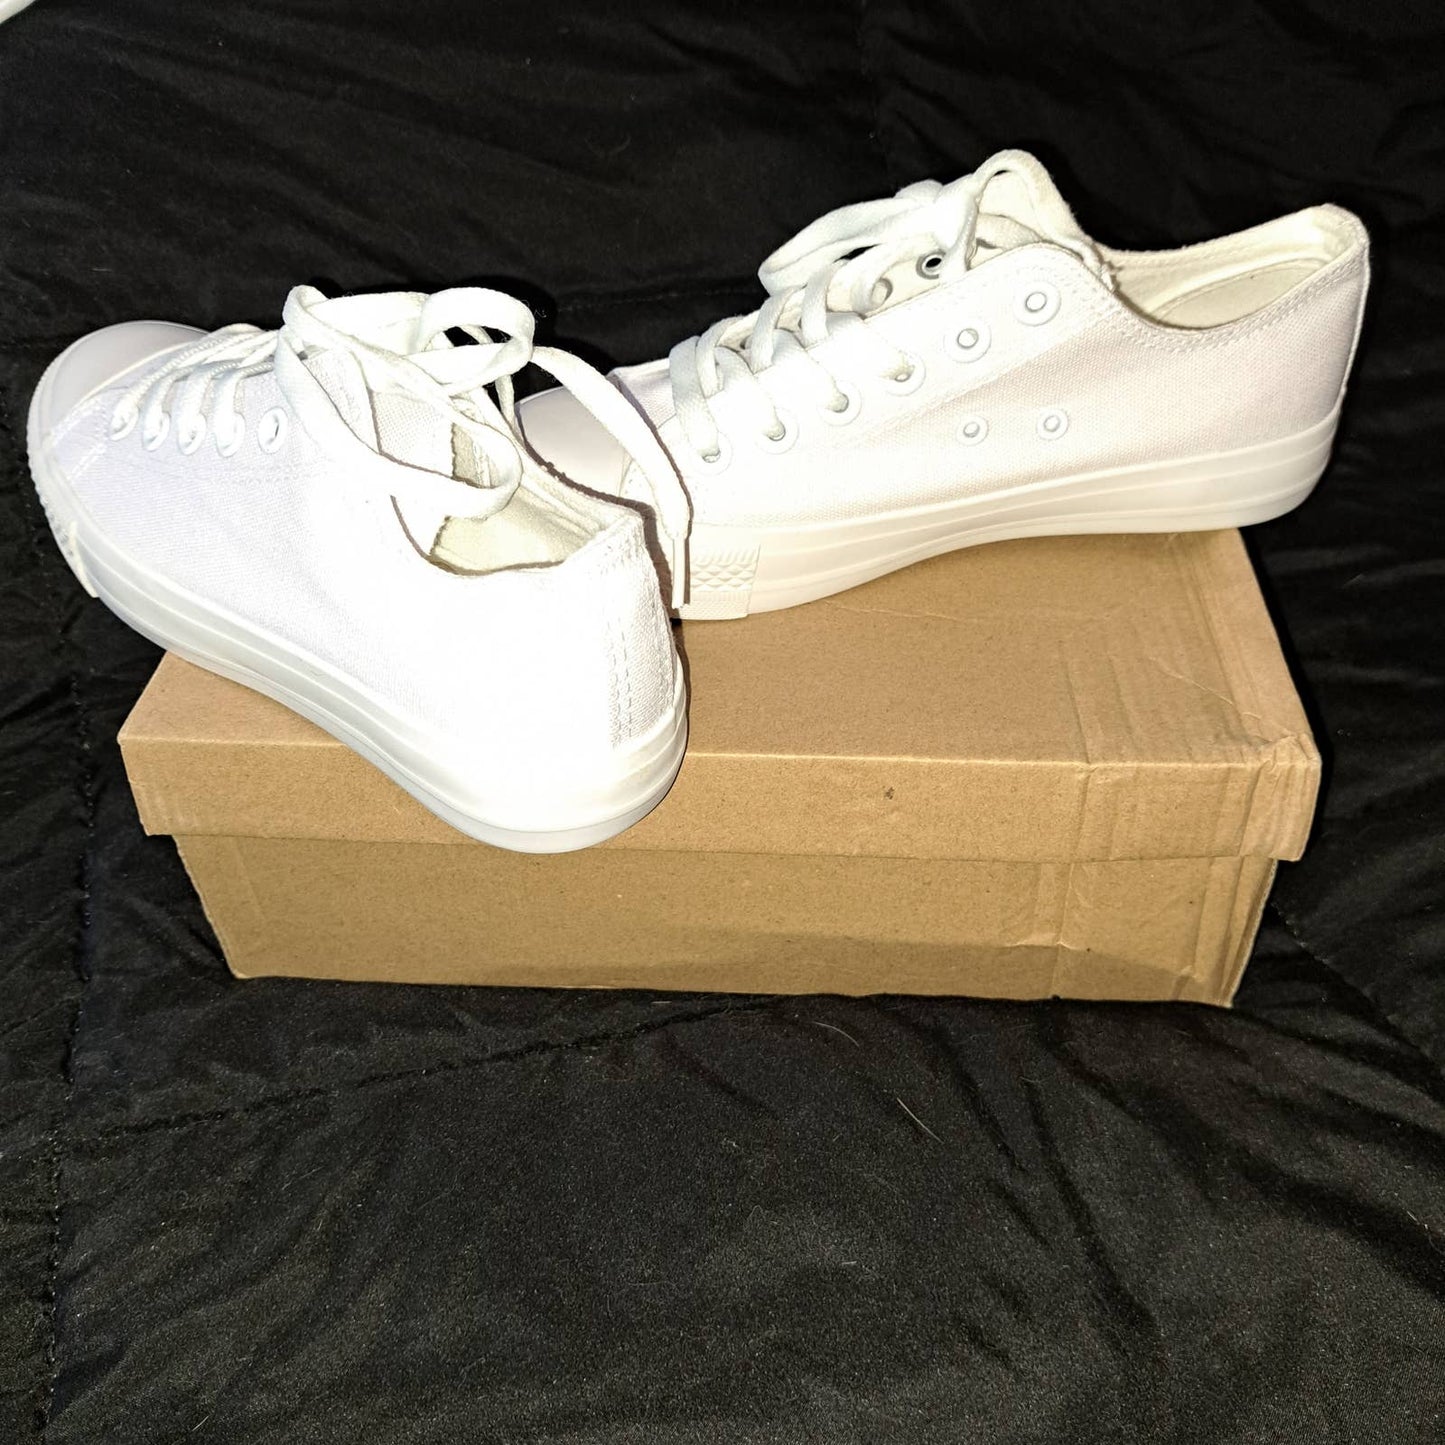 NIB-White Chucky sole sneaker 5.5 US